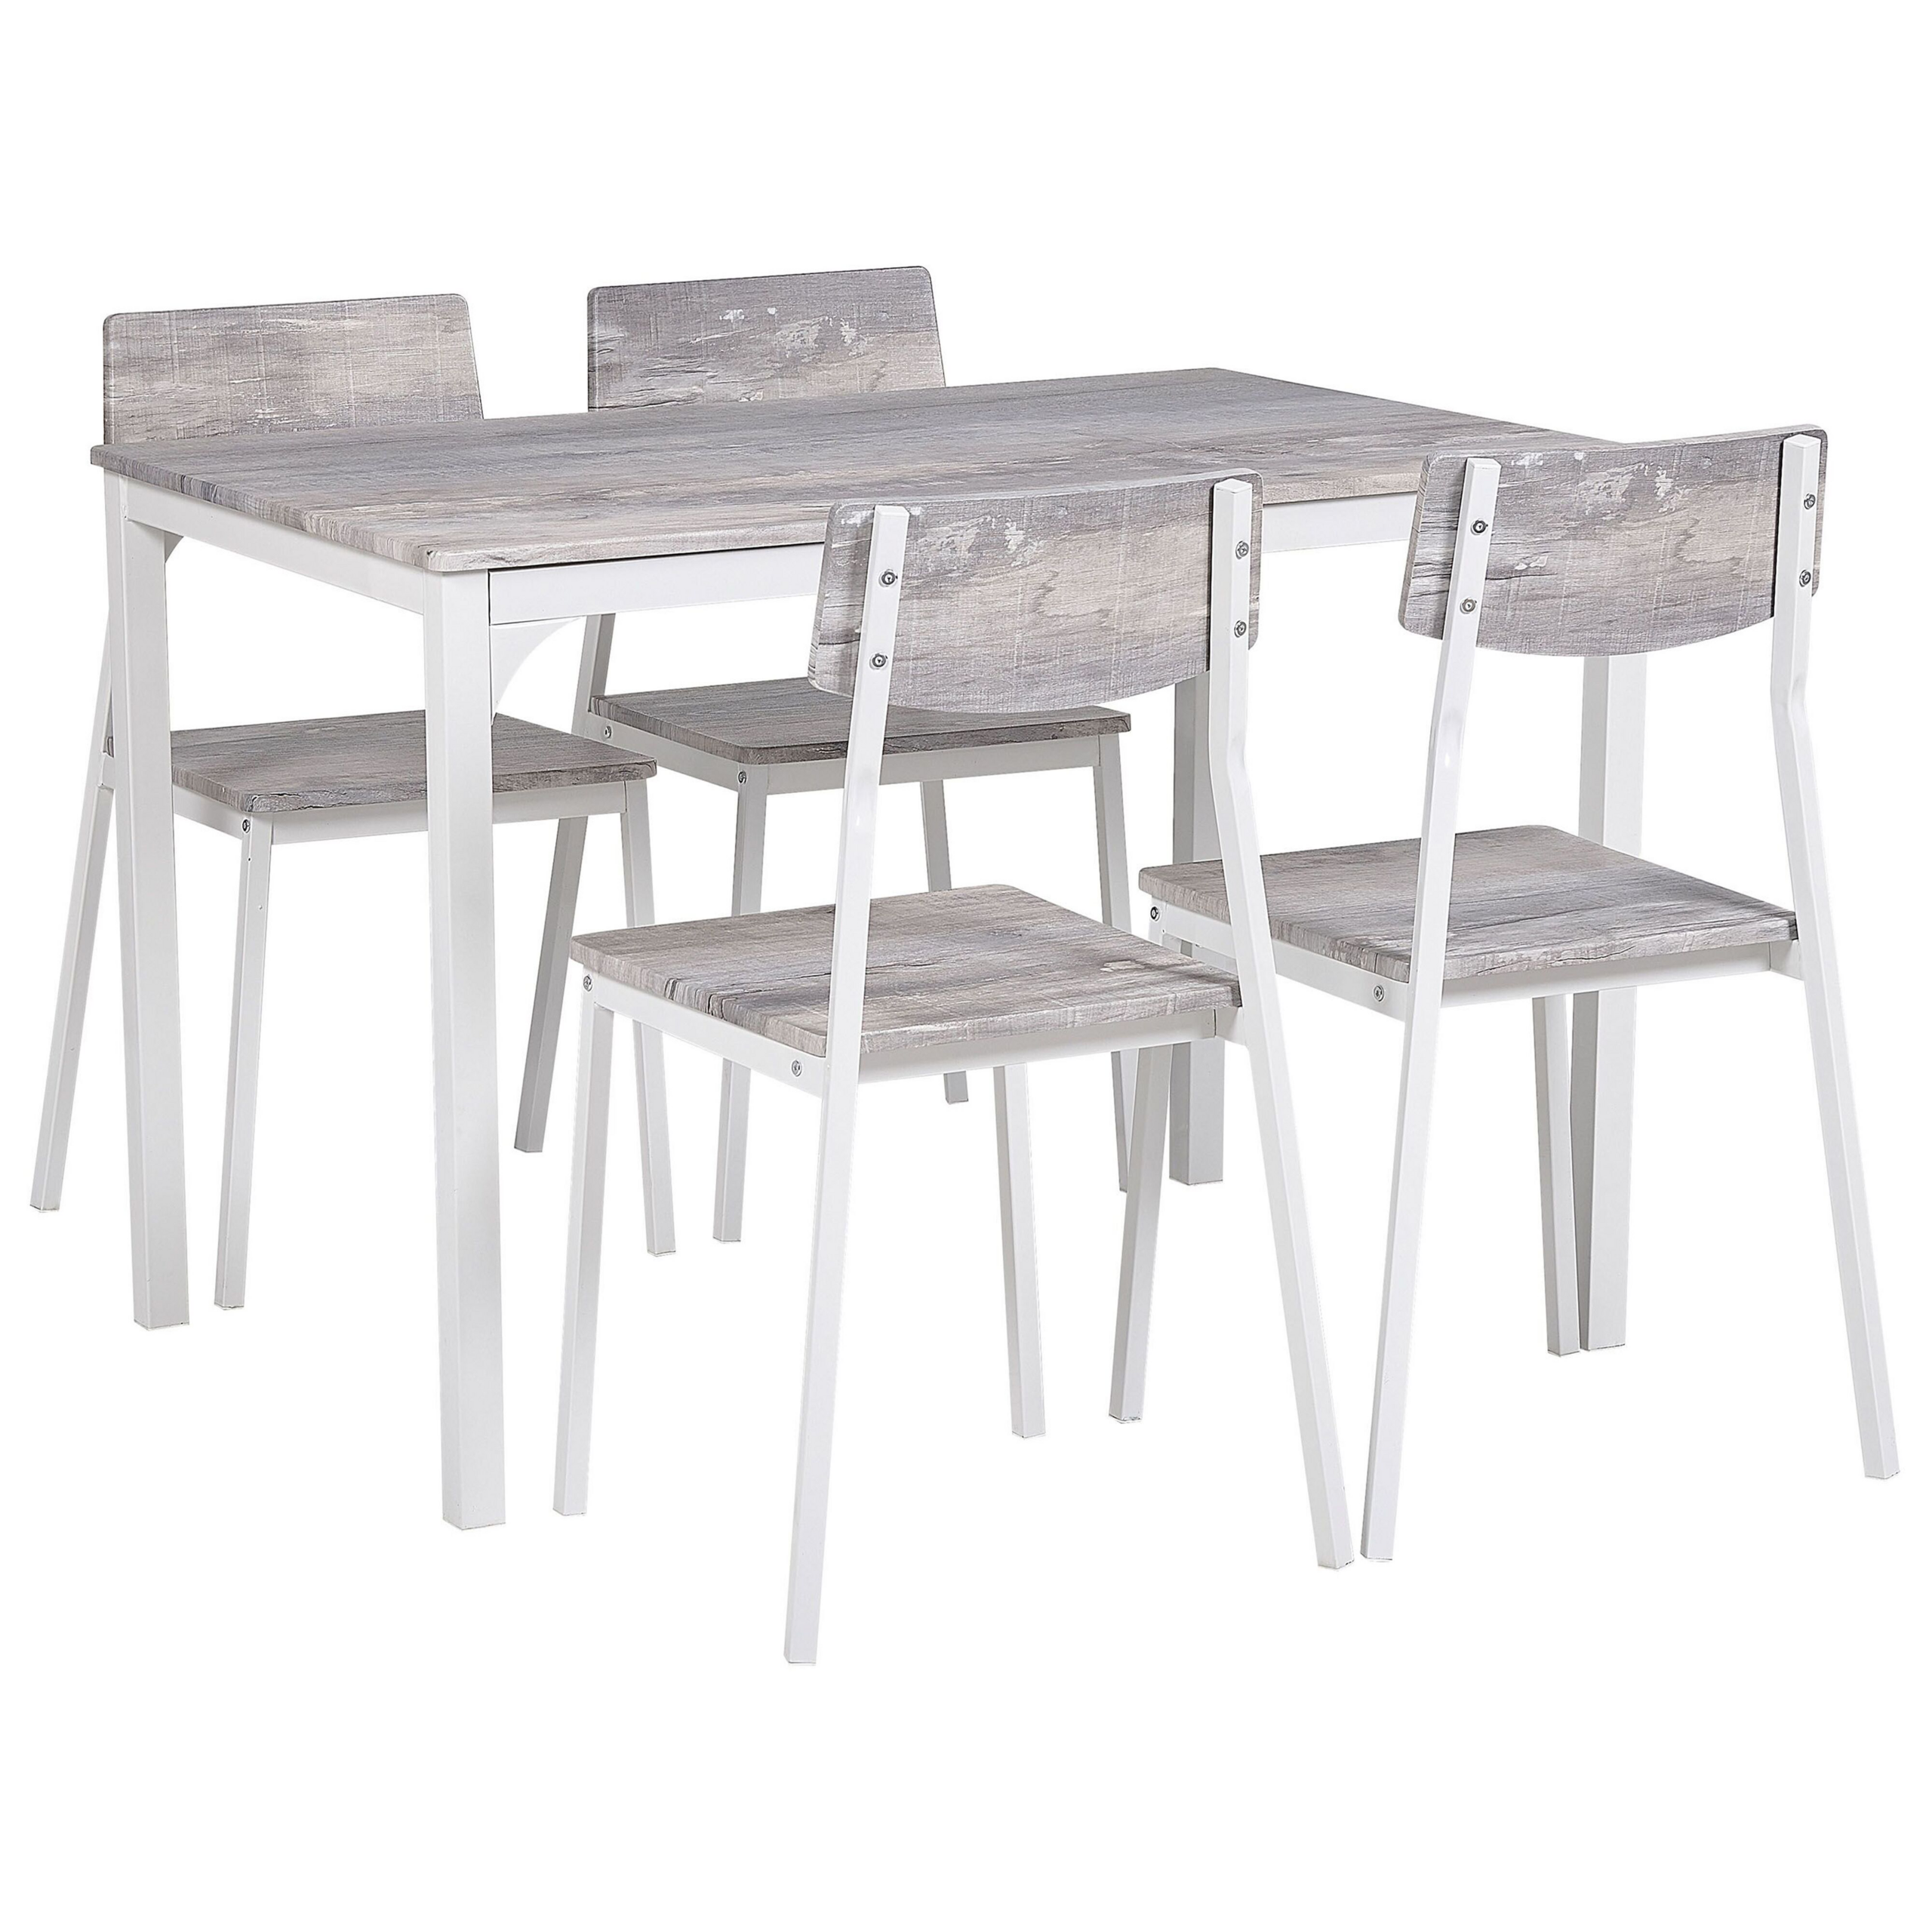 Beliani Dining Set Grey Top White Steel Legs Rectangular Table 110 x 70 cm 4 Chairs Modern